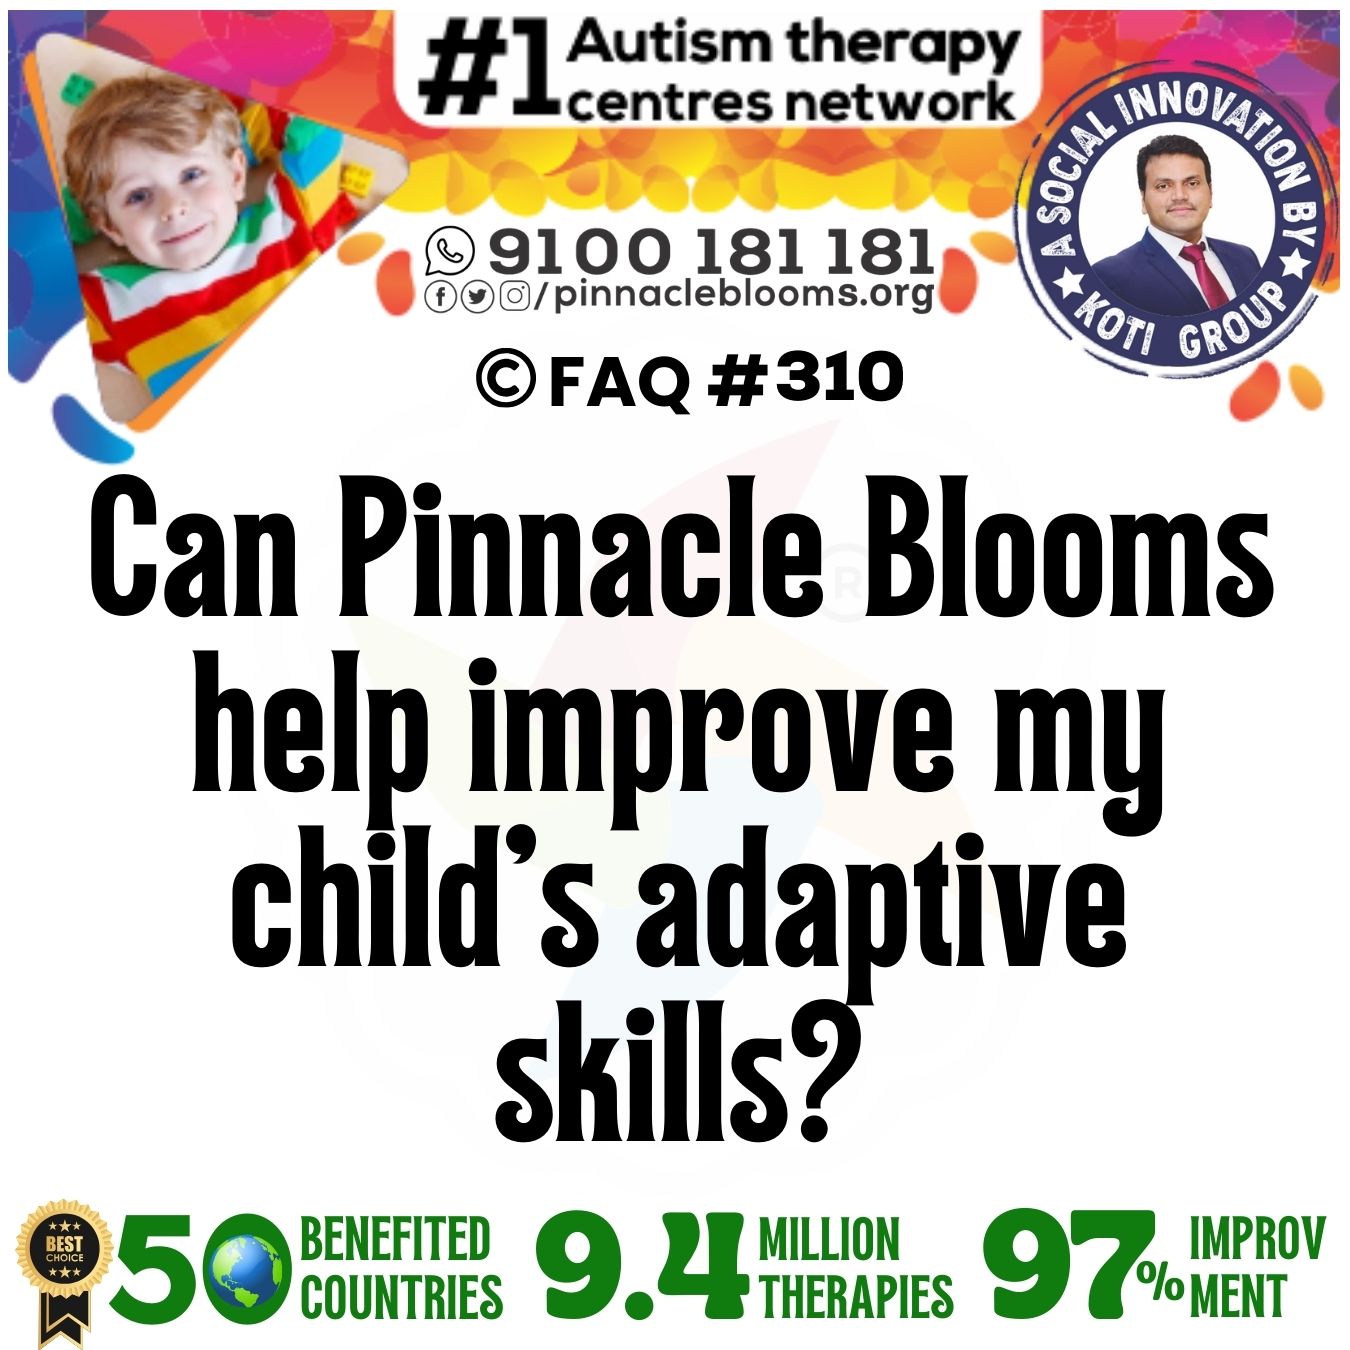 Can Pinnacle Blooms help improve my child's adaptive skills?